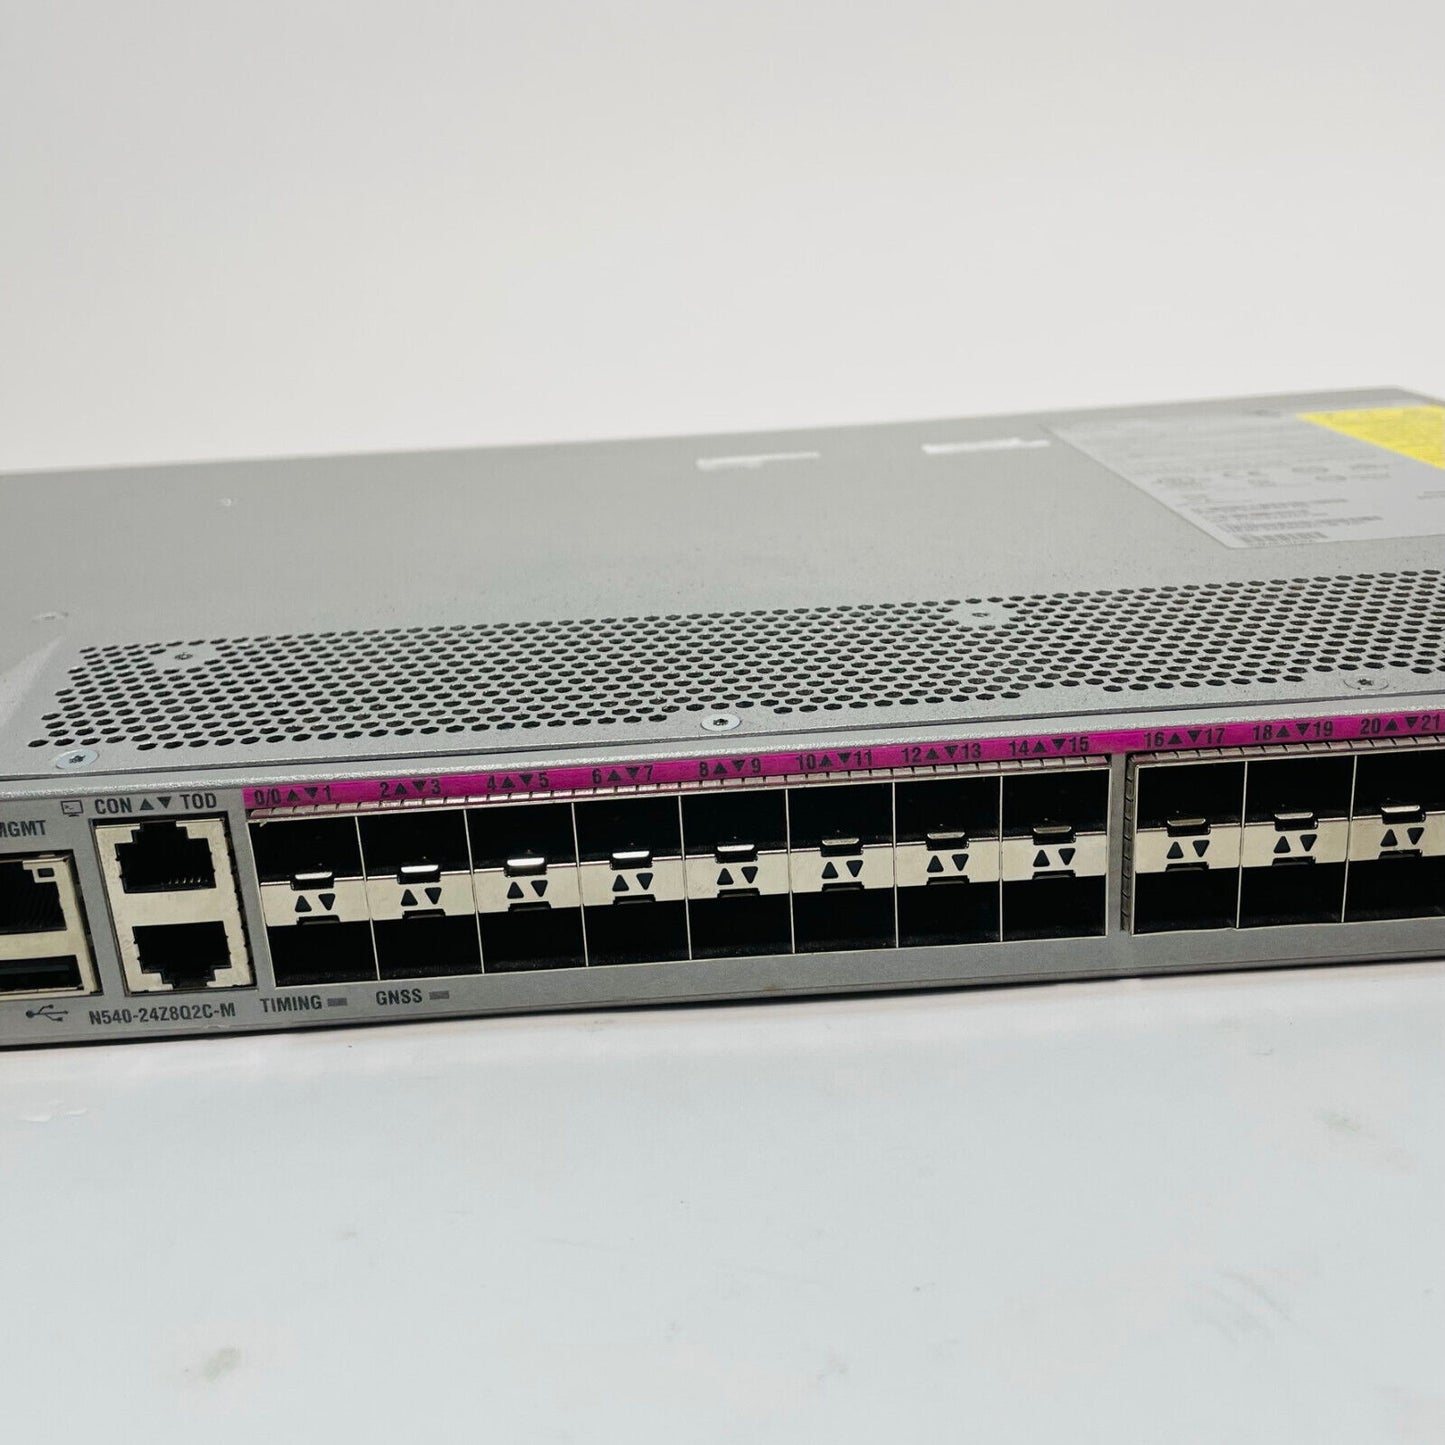 New Cisco N540-24Z8Q2C-M Router w/ DC Power N540-PWR400 x2